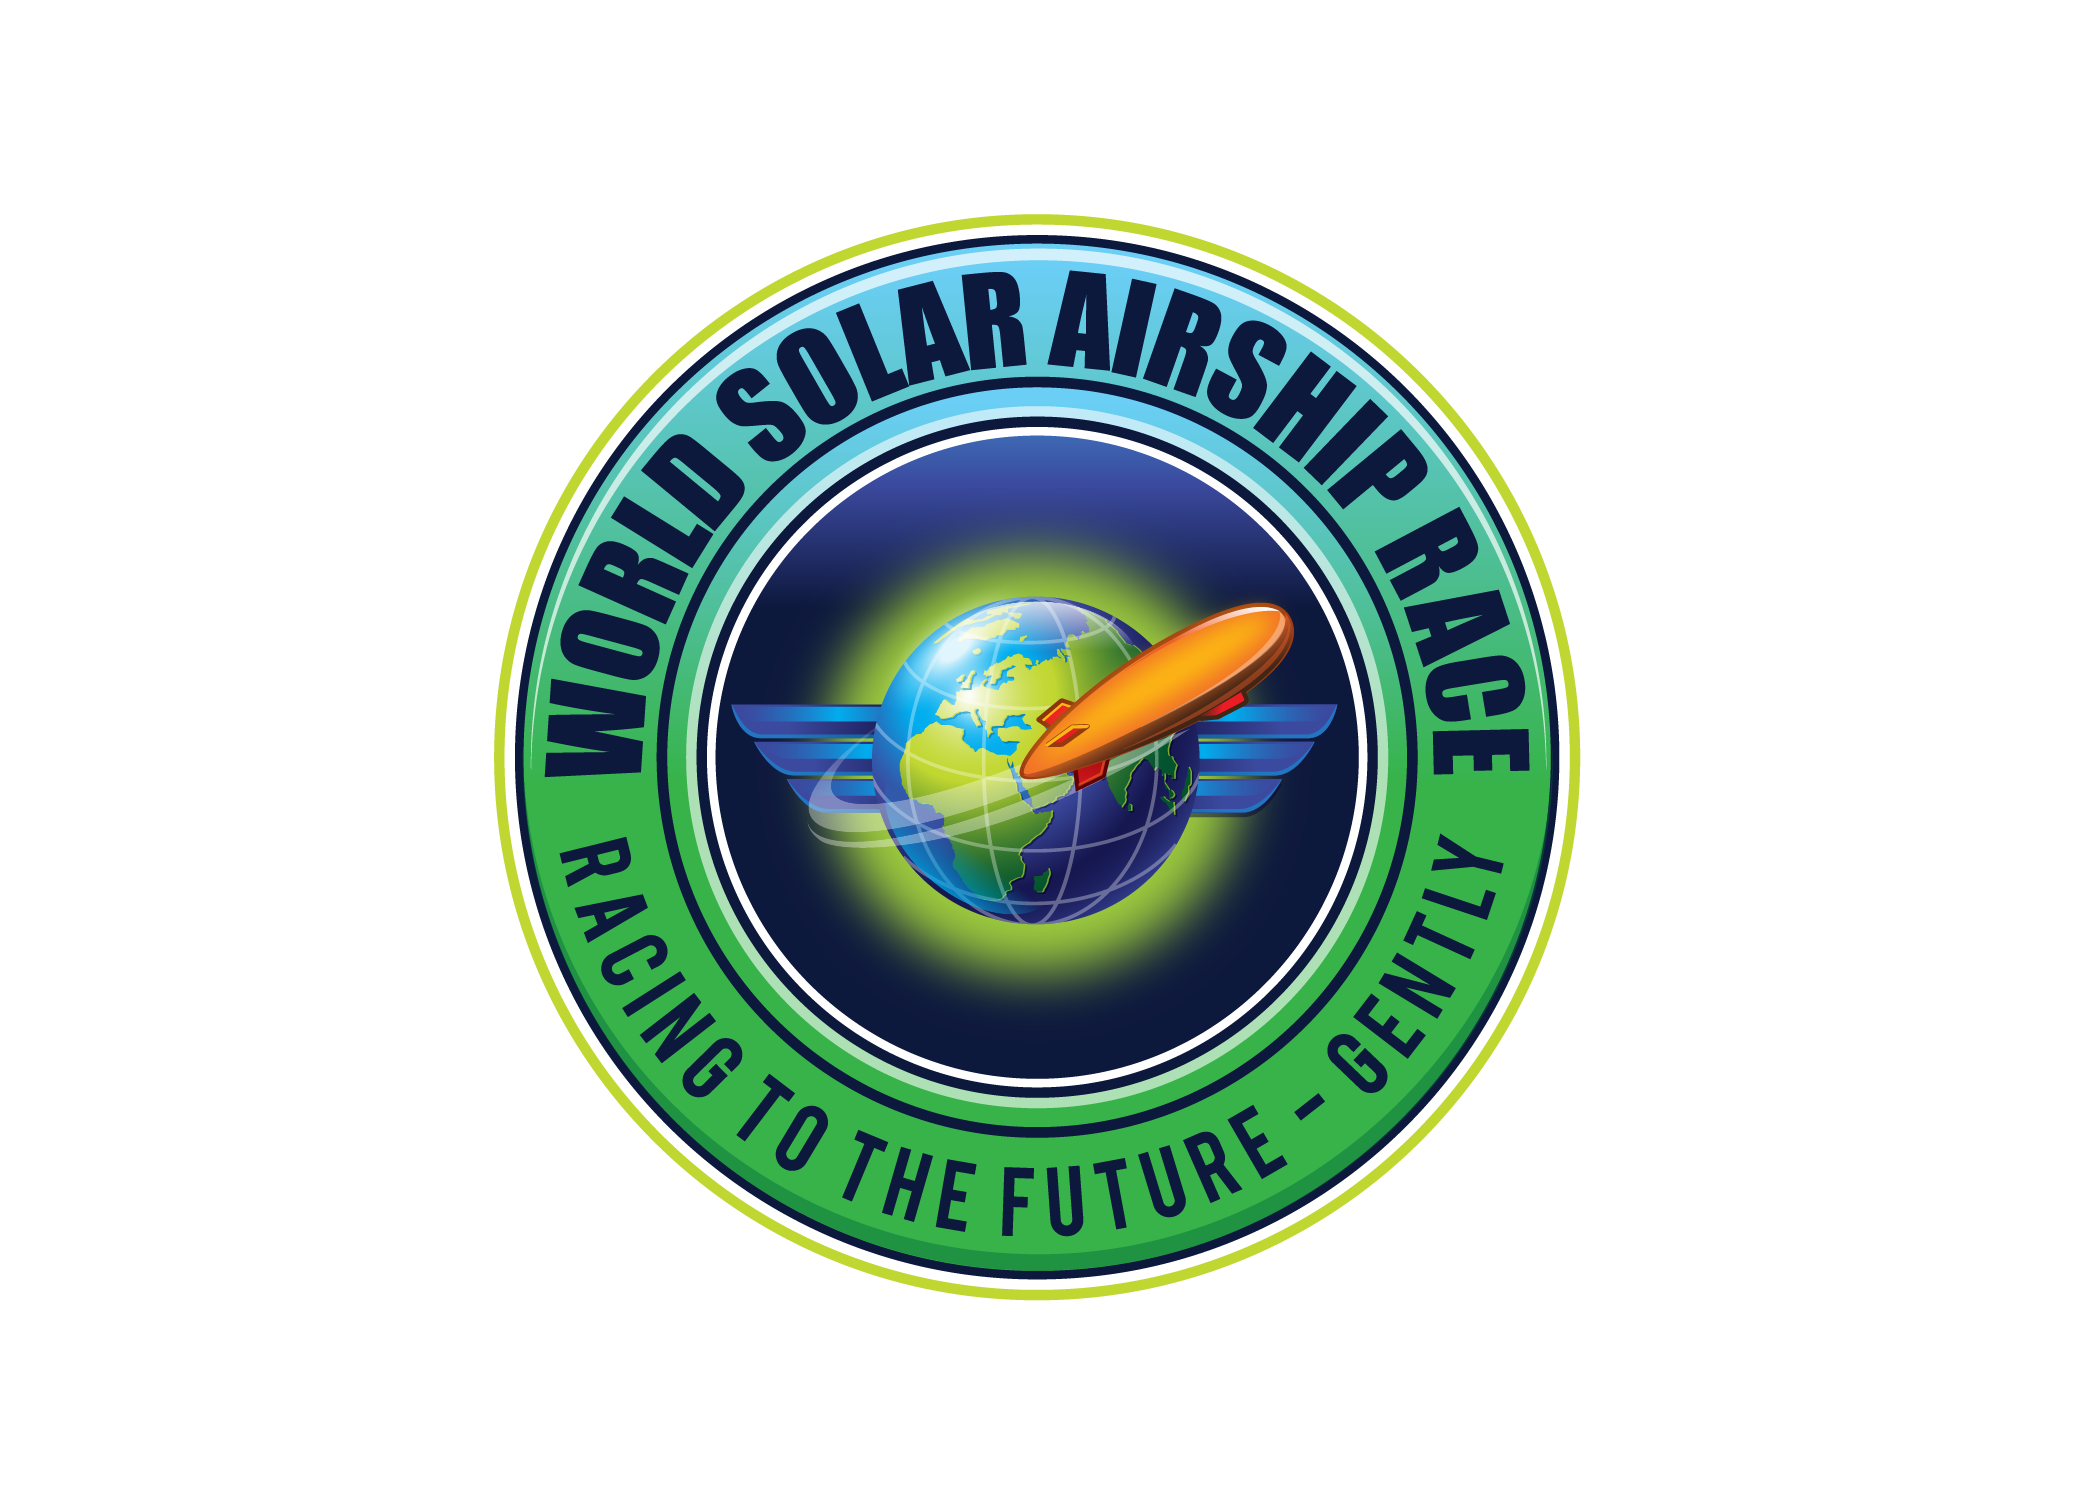 World Solar Airship Race